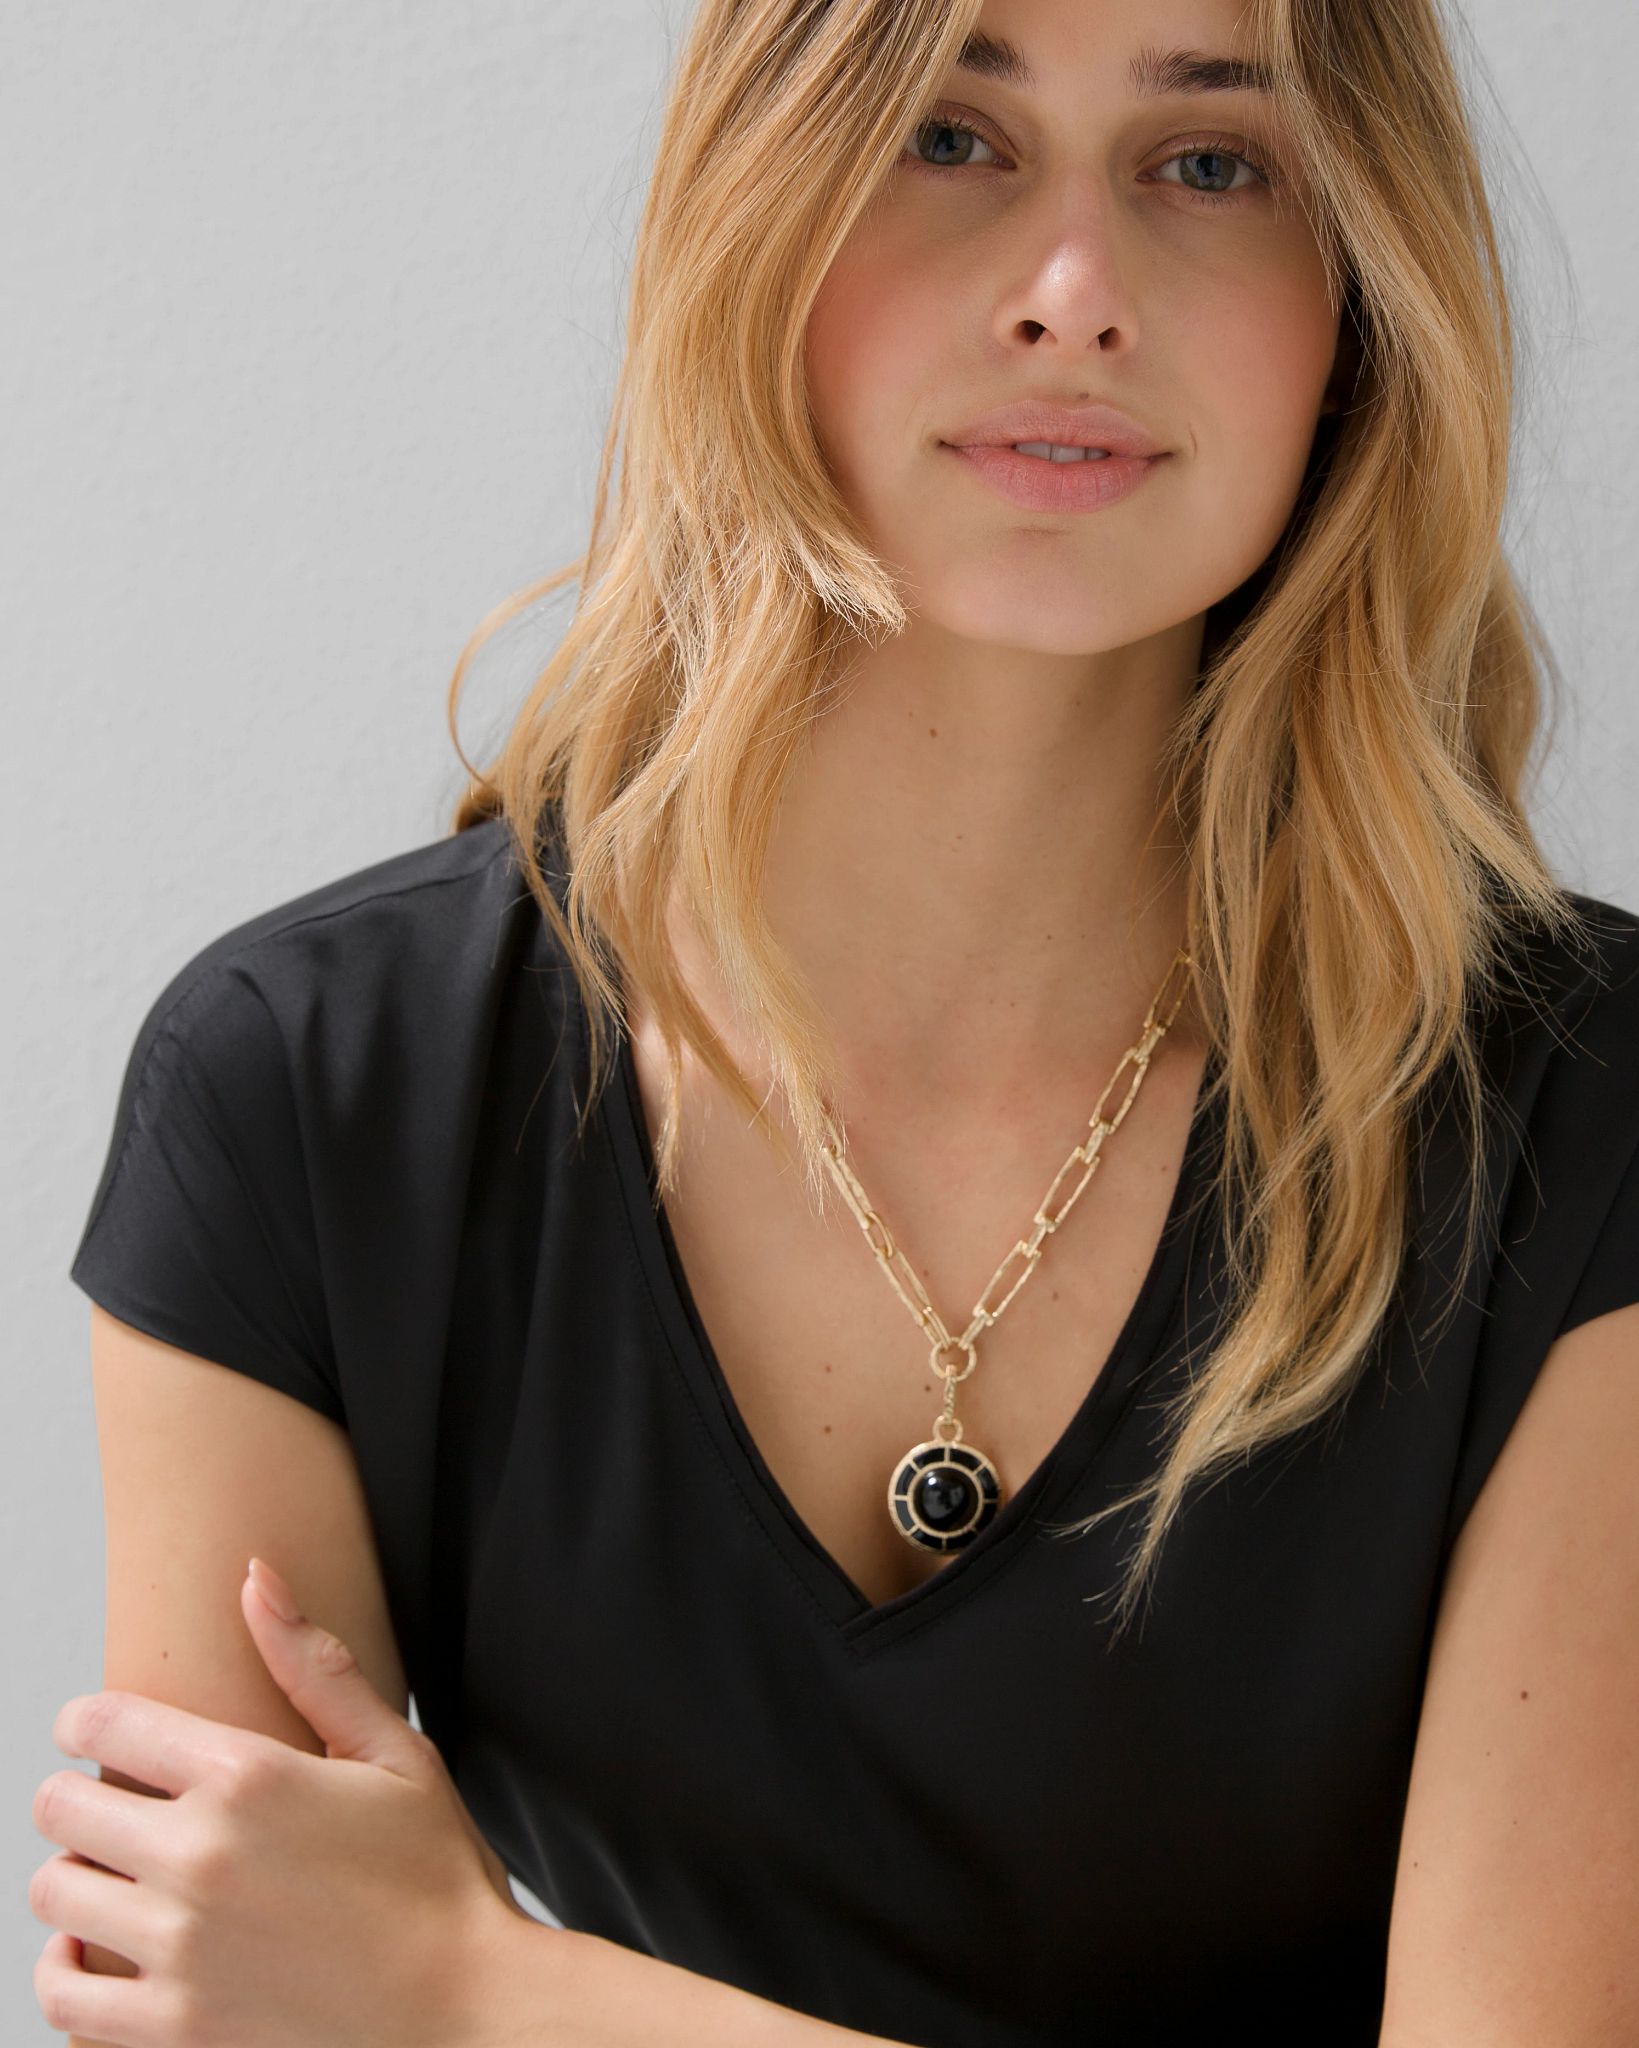 Goldtone & Black Pendant Necklace